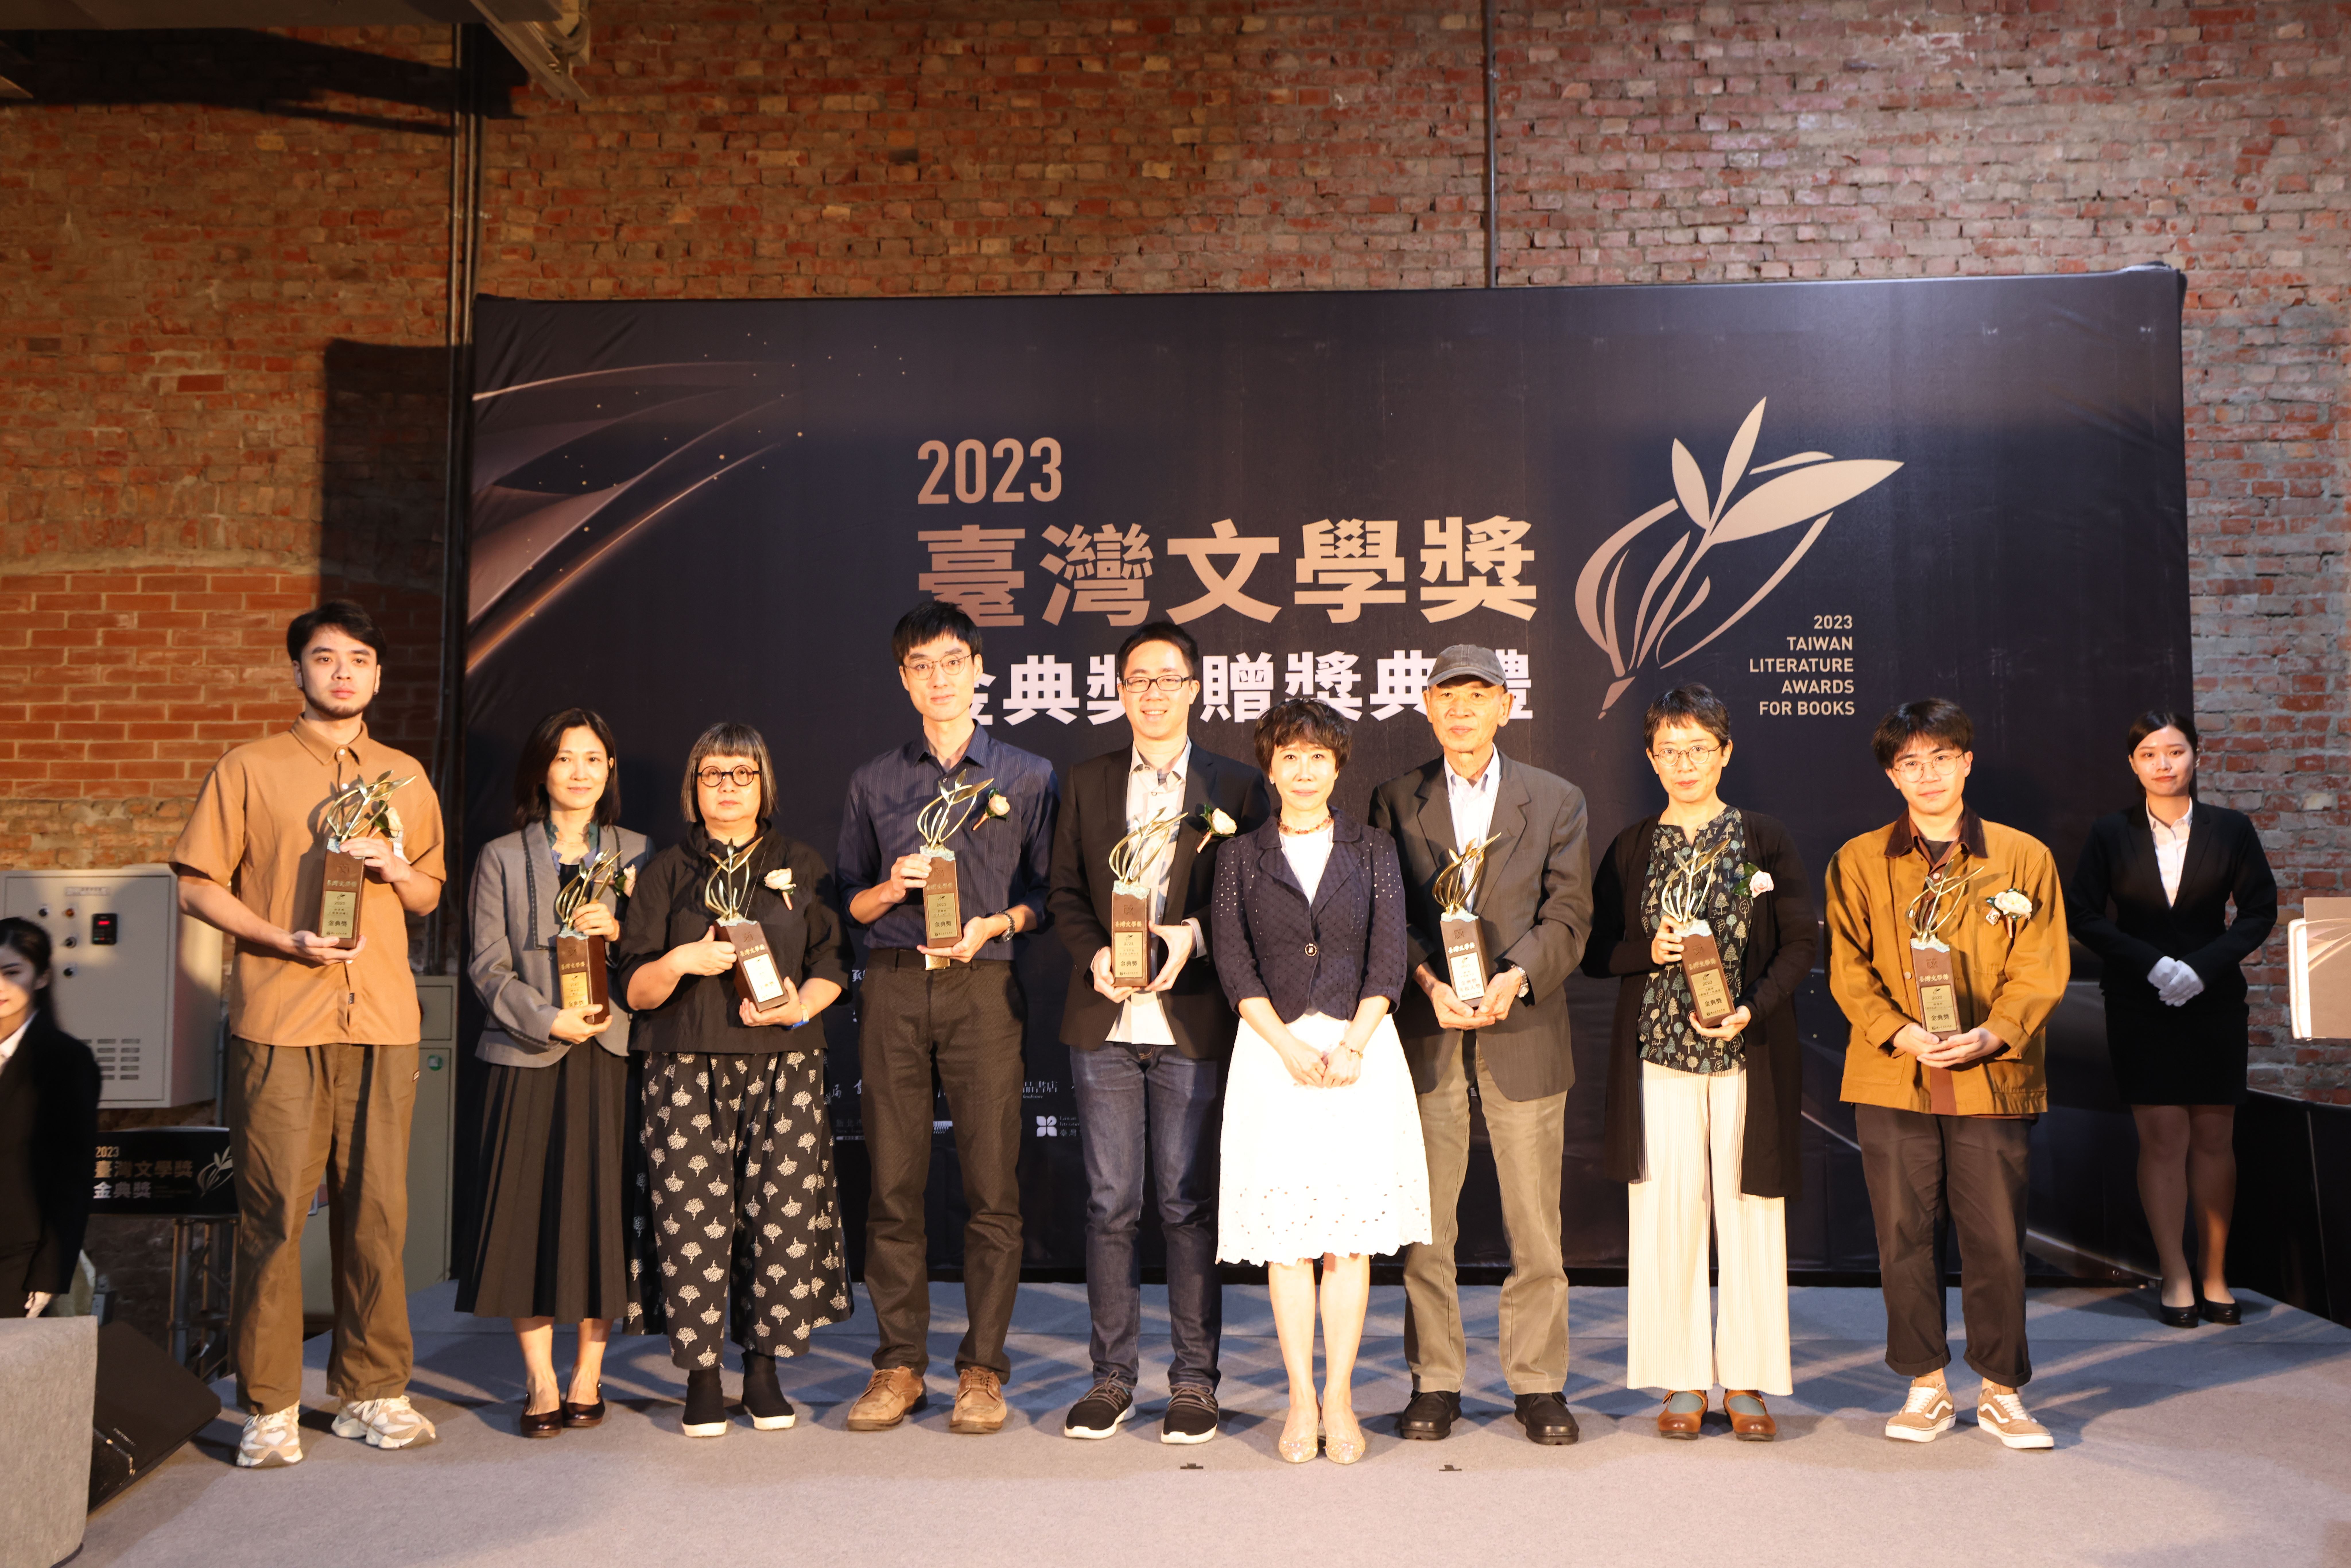 Taiwan Literature Awards ceremony